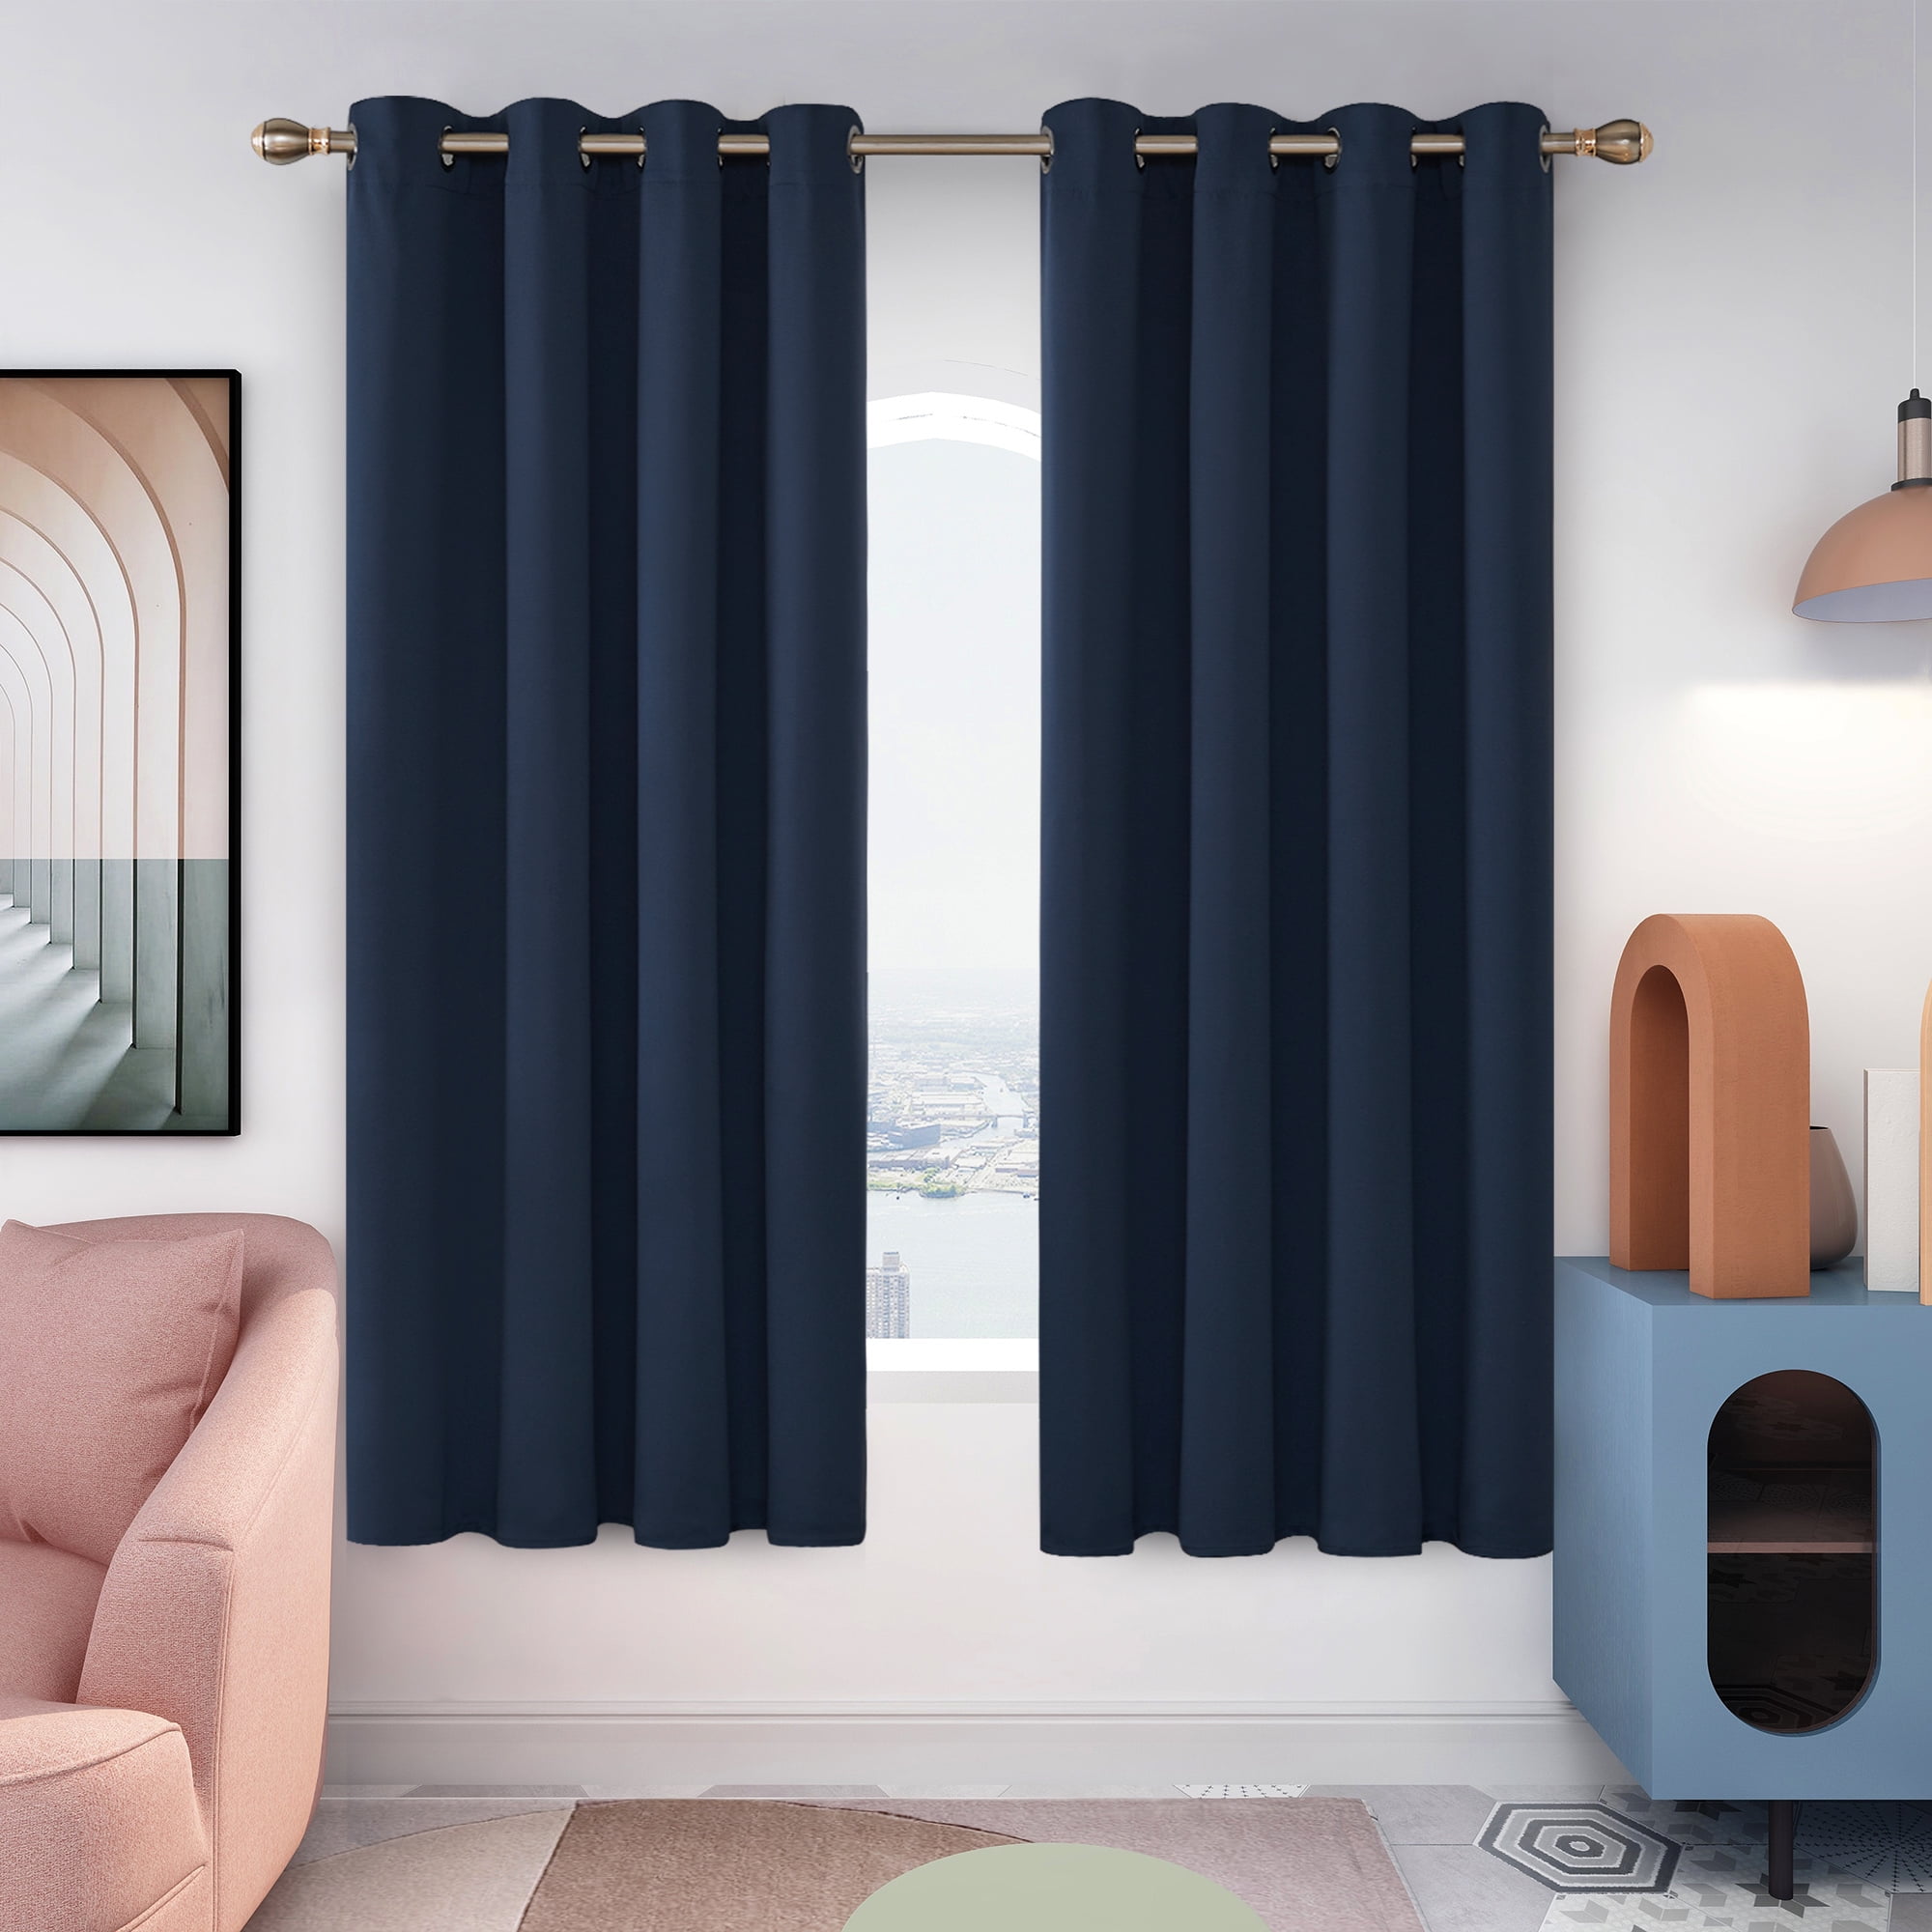 High-Quality Custom Made Curtains for Every Room